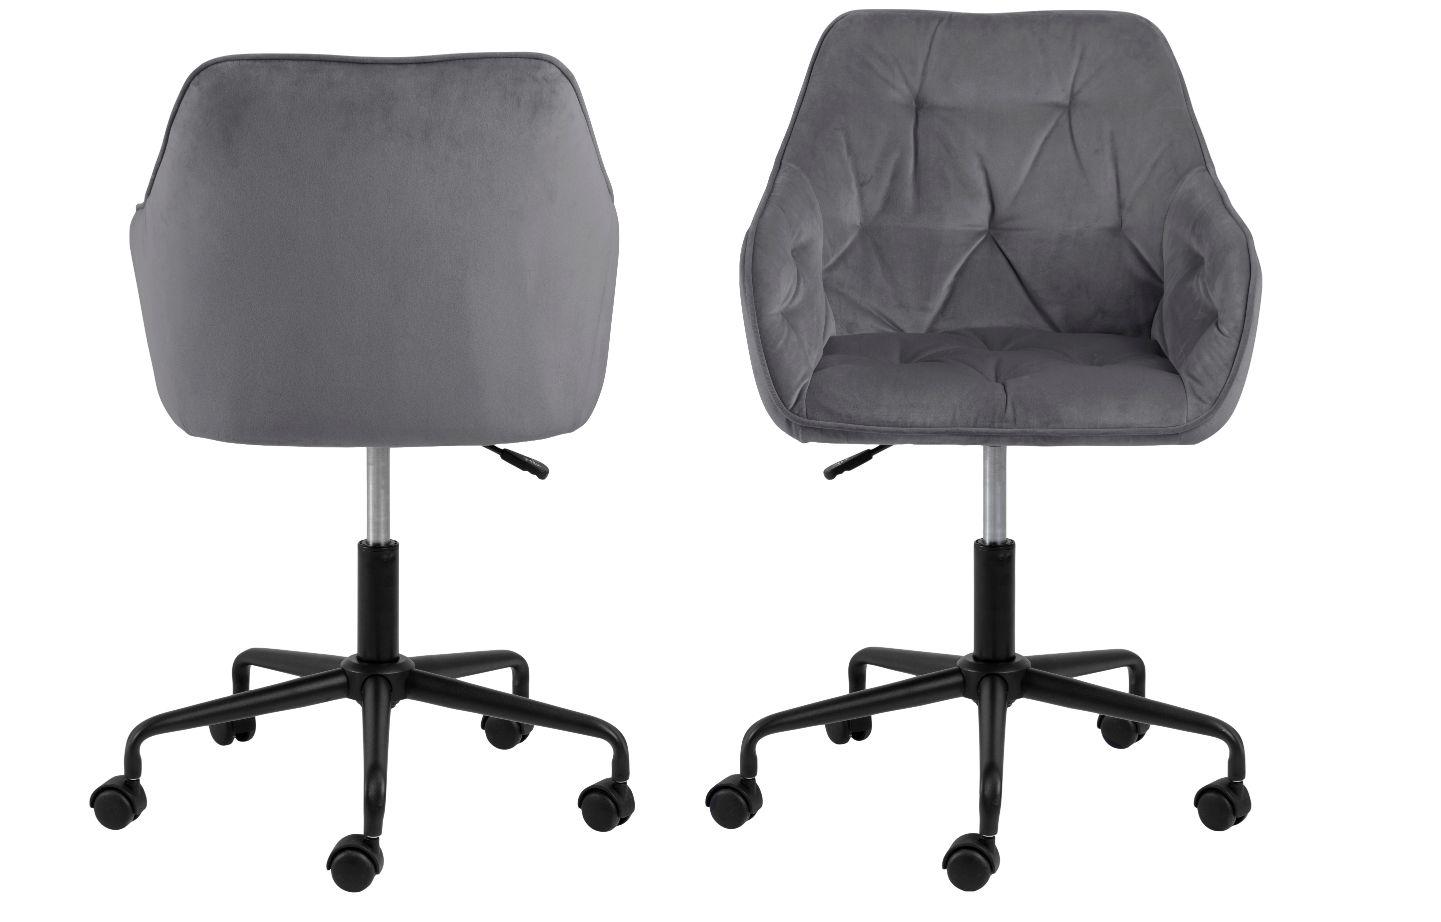 Kancelářská Židle Brooke B: Tmavěšedá, Samet - černá/tmavě šedá, Design, kov/textil (59/88,5/58,5cm)